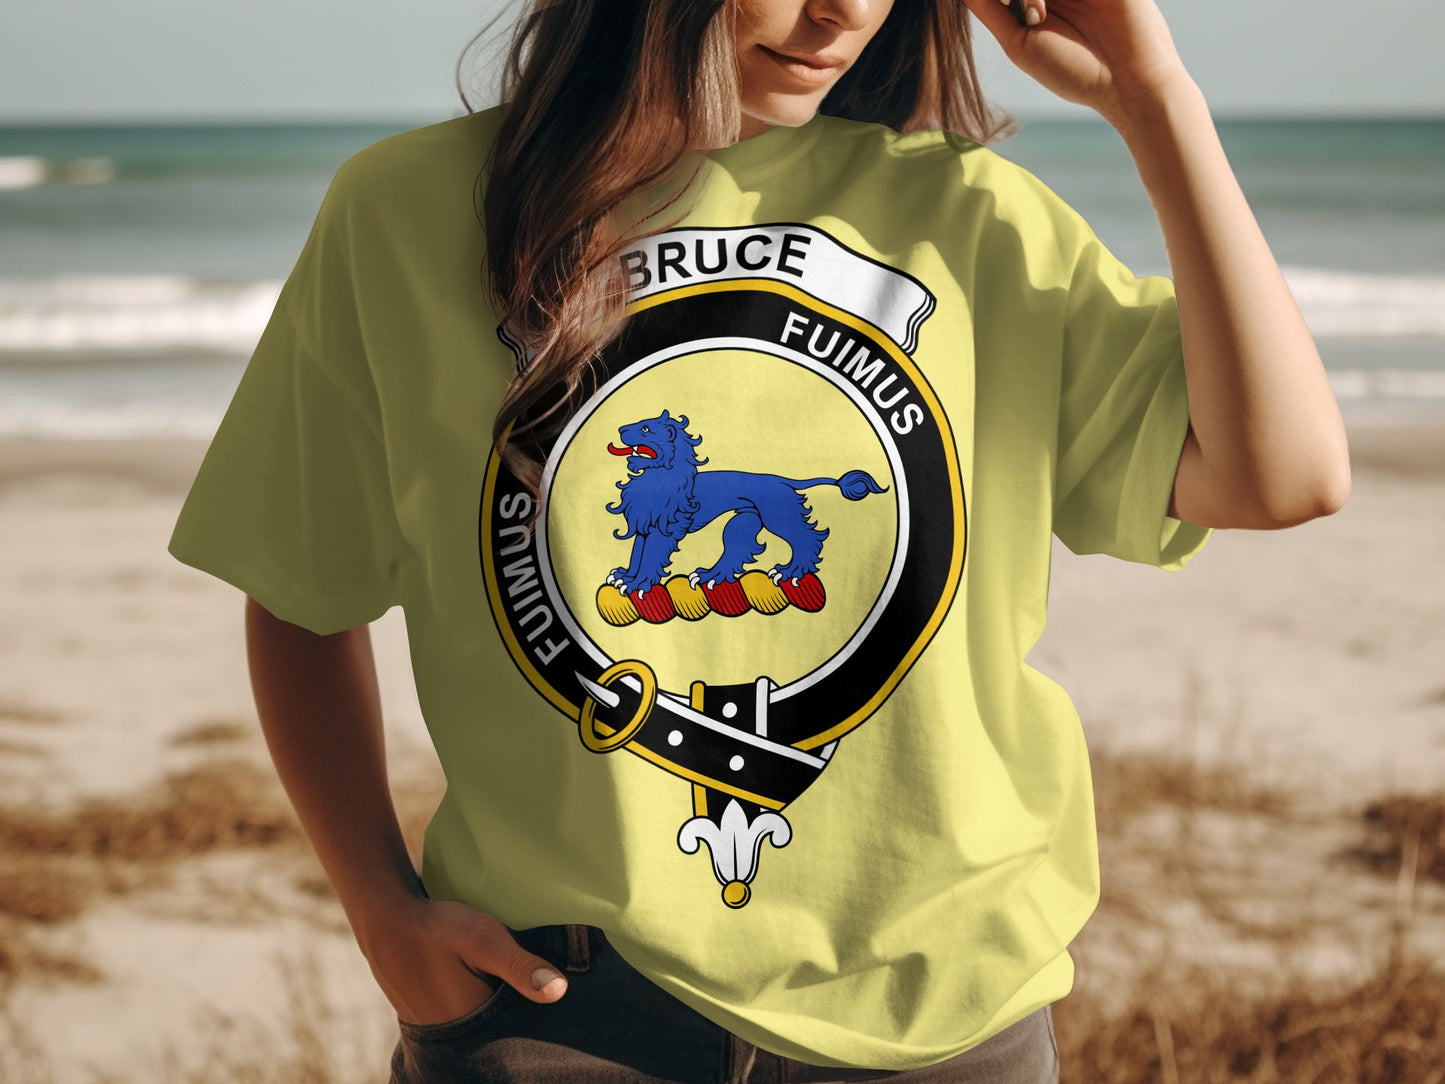 Bruce Scottish Clan Crest Highland Games T-Shirt - Living Stone Gifts